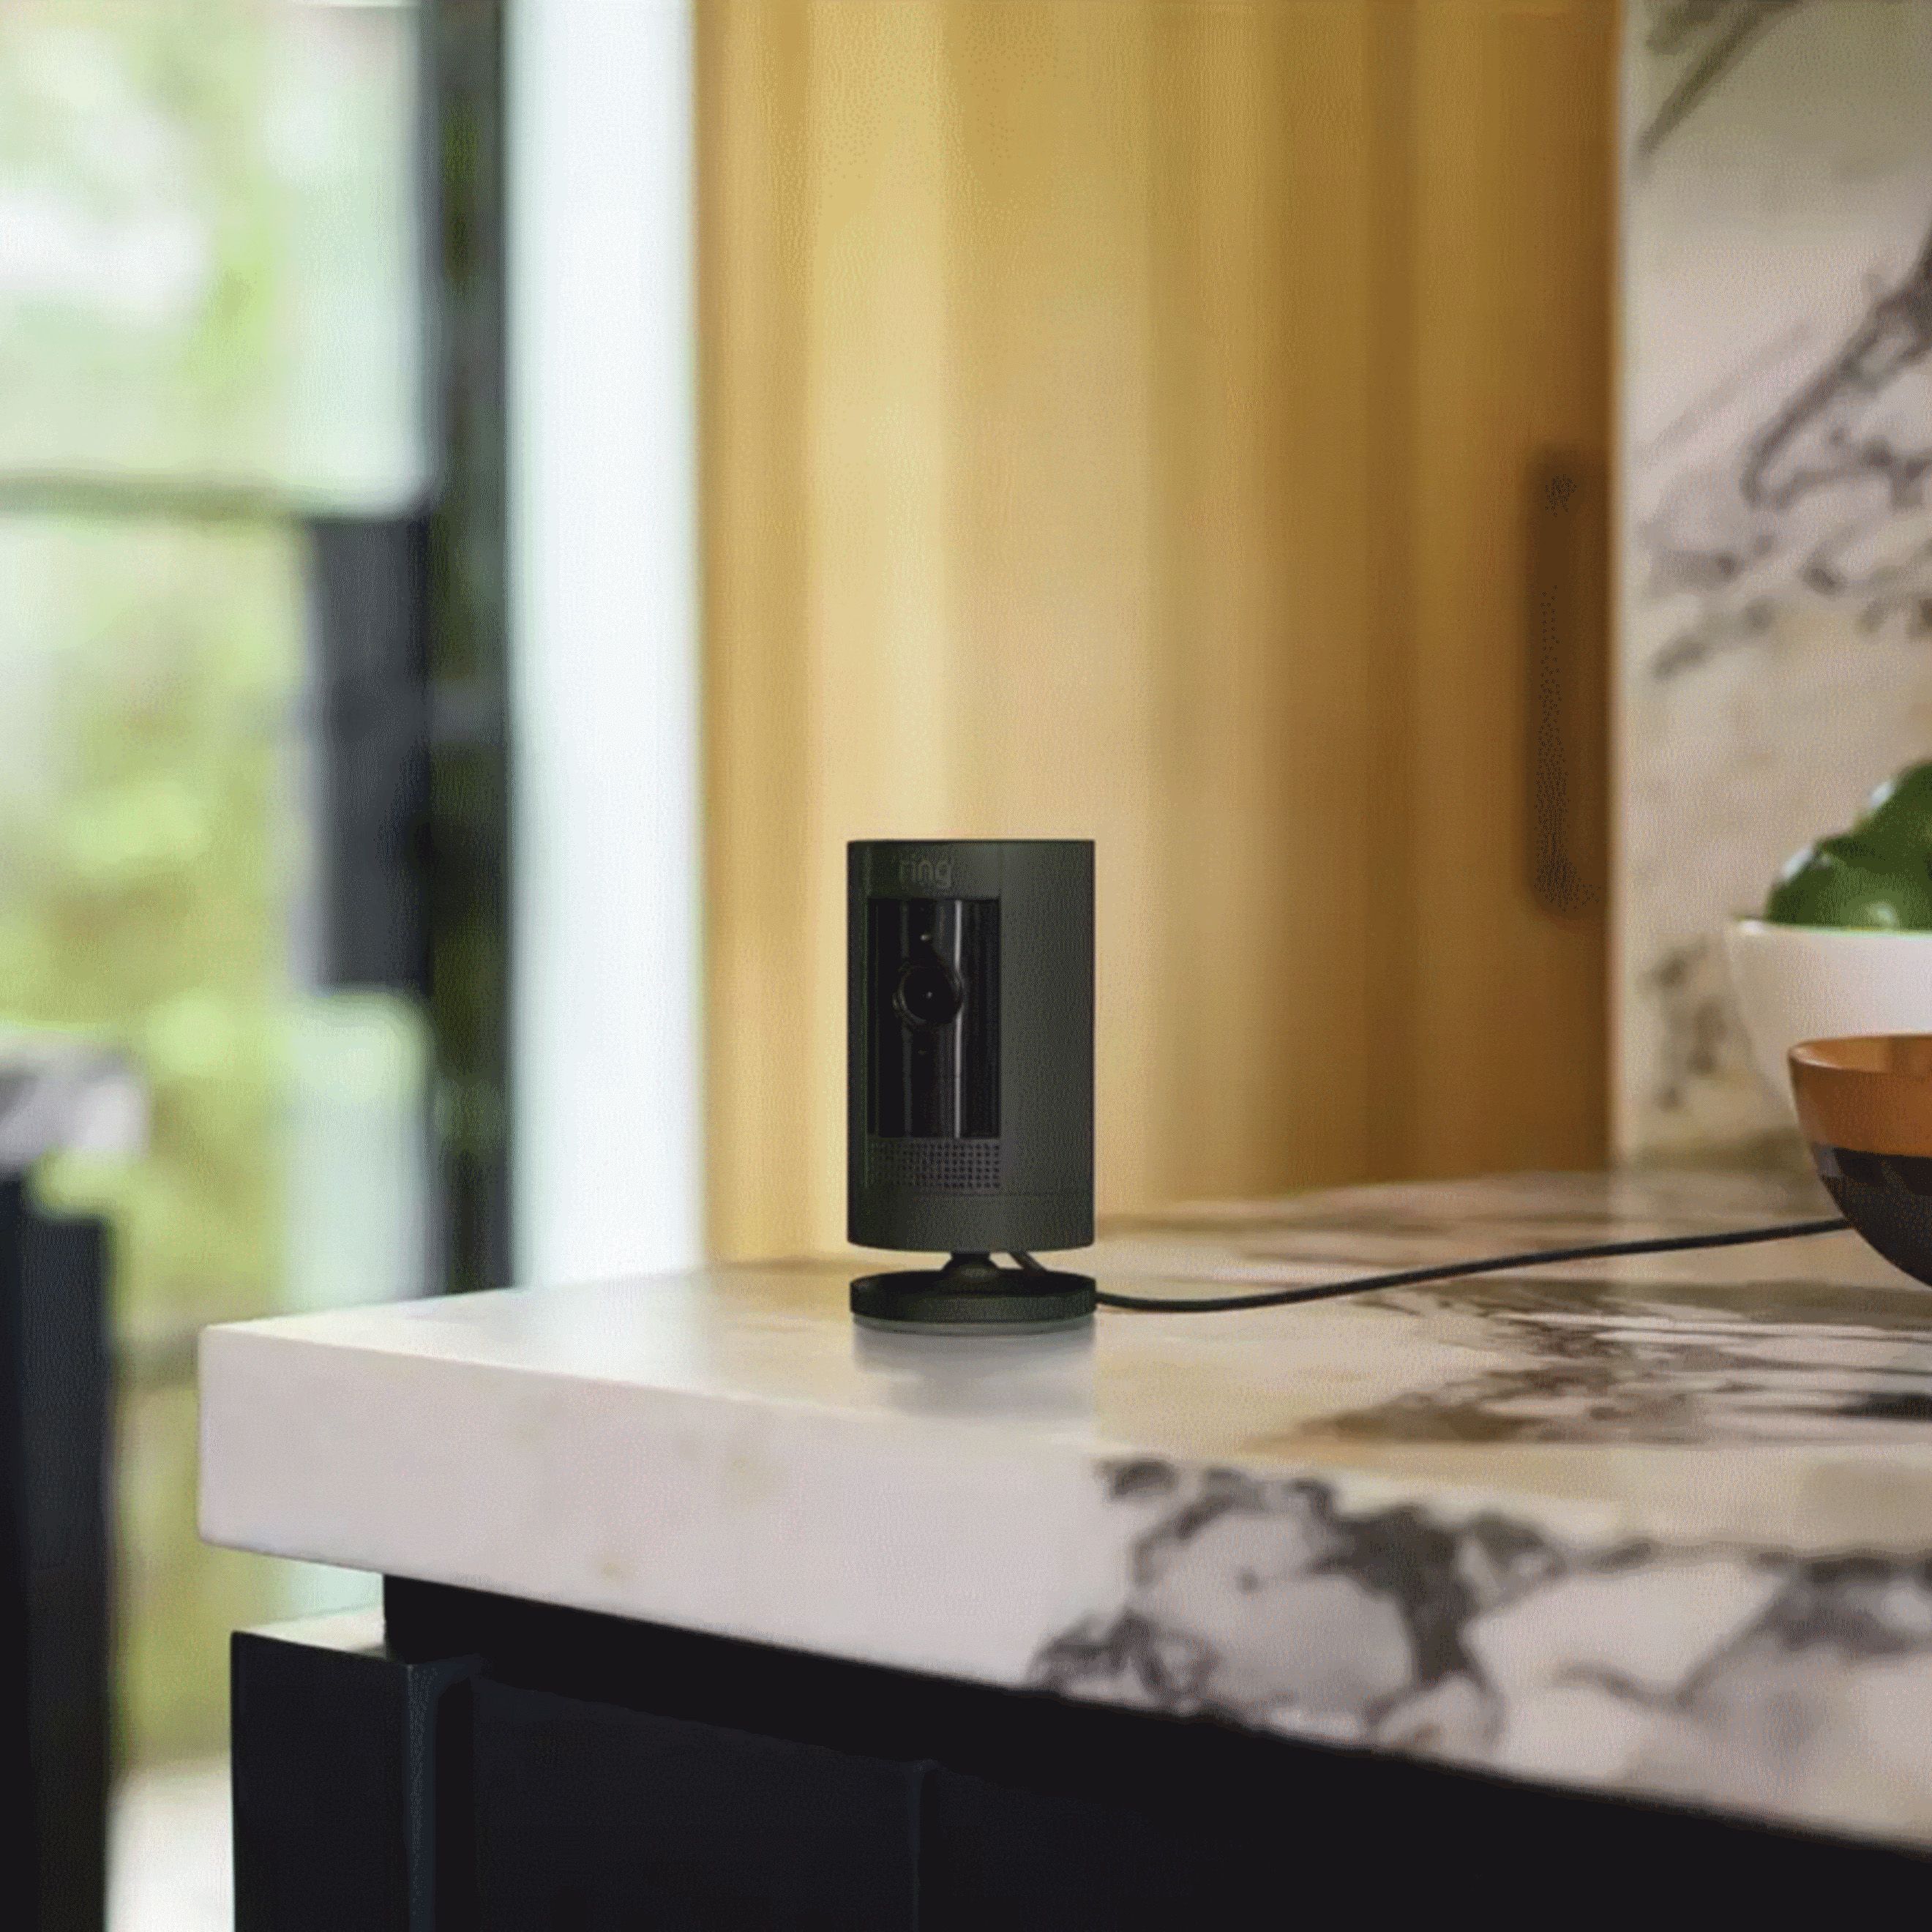 Ring Stick Up Wired Indoor & outdoor Tilt adjustable Smart camera in Black